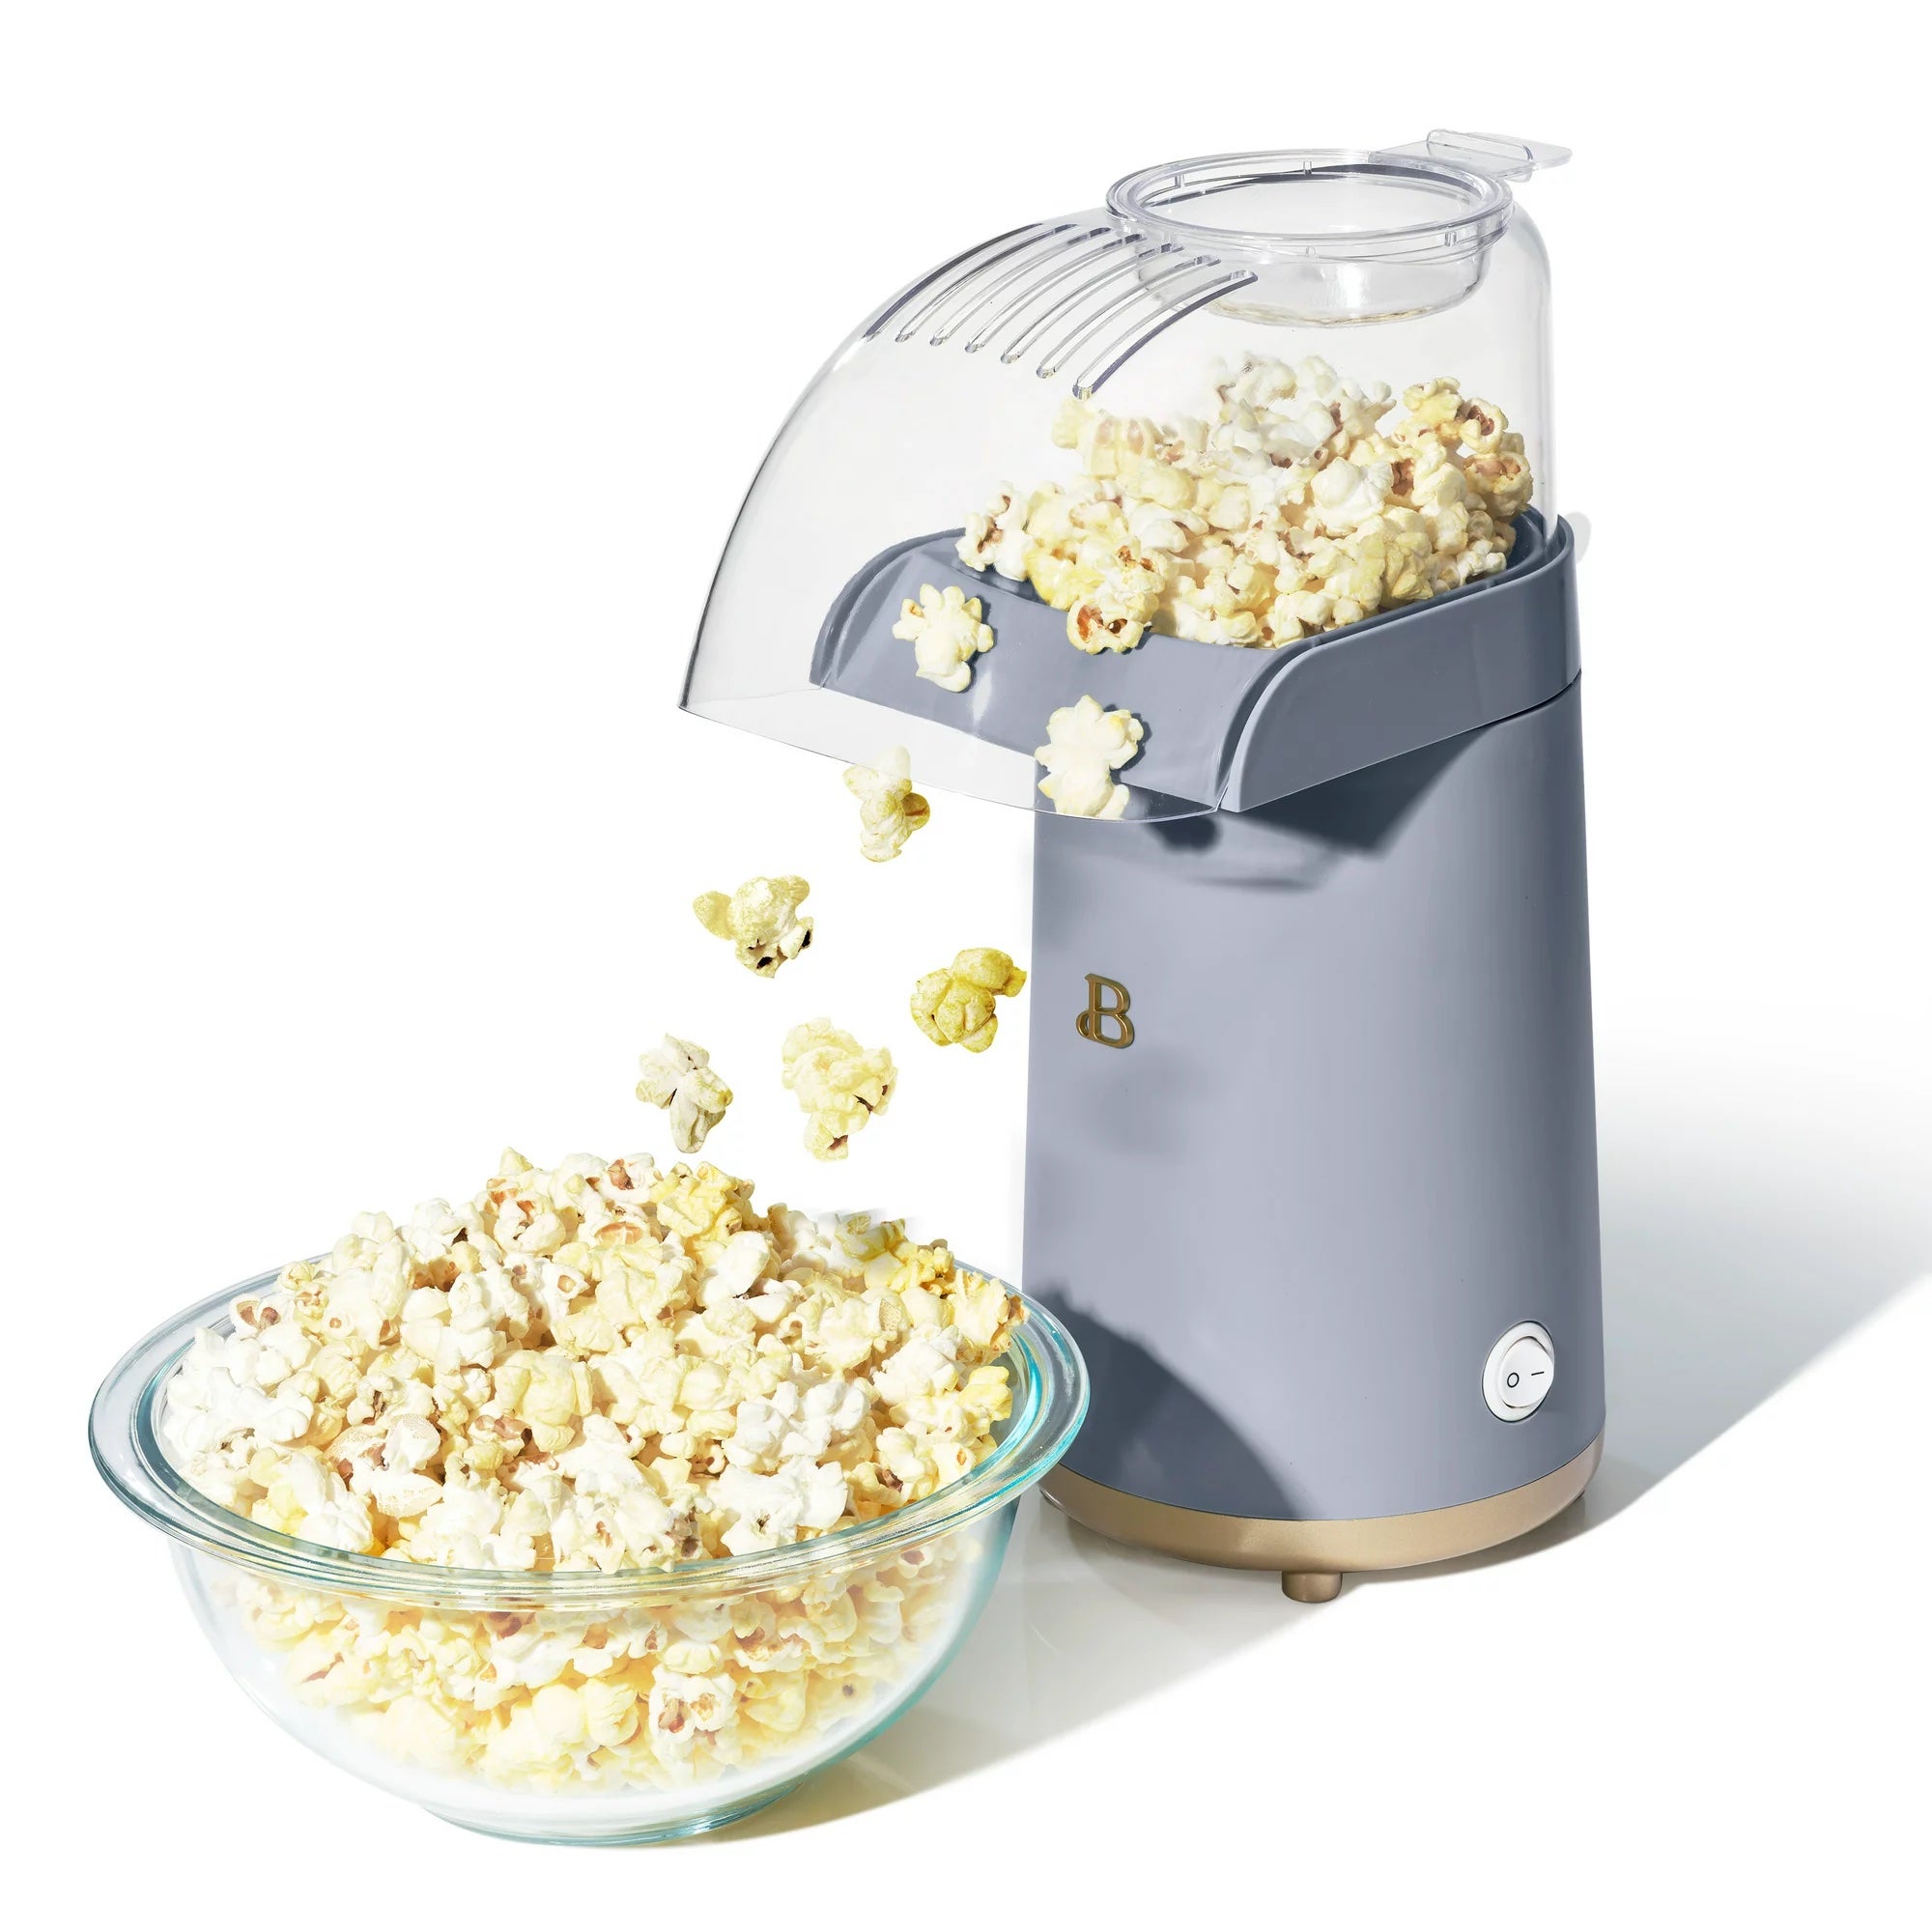 Blue popcorn maker